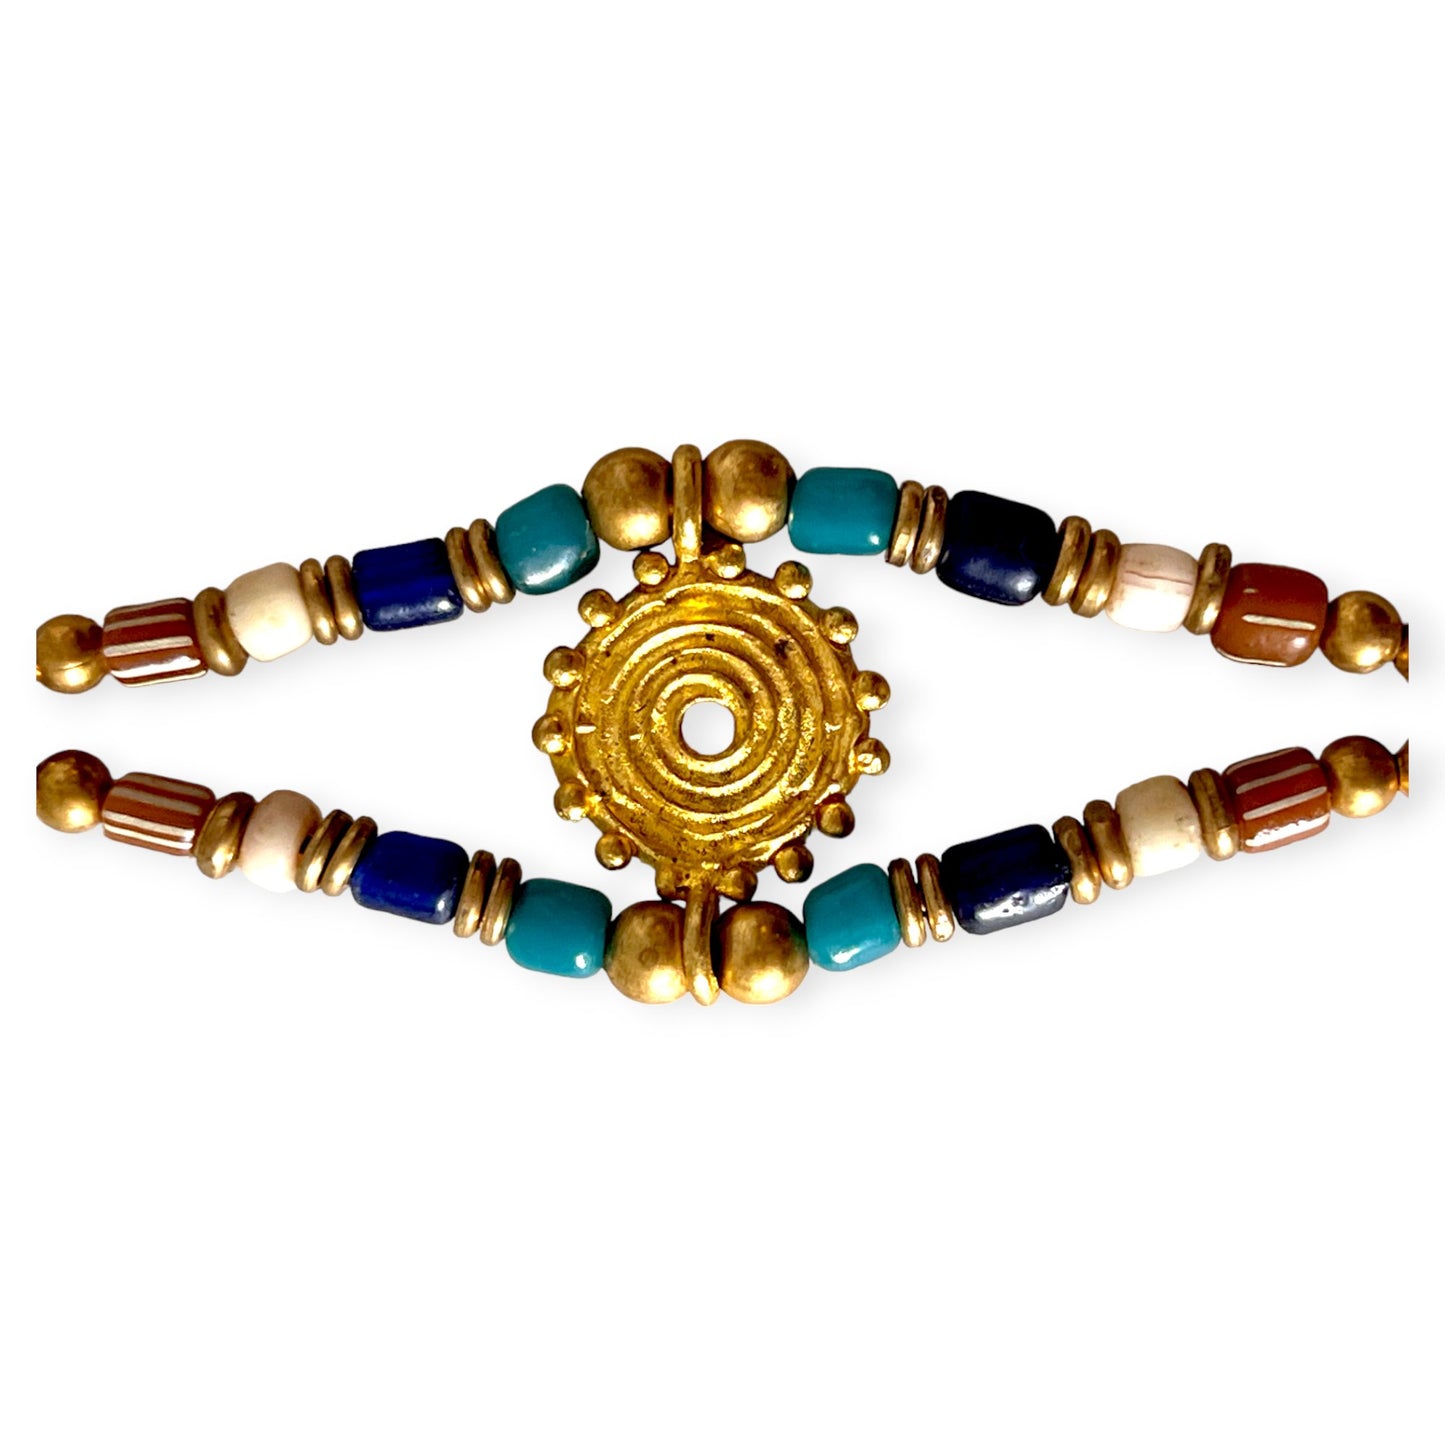 Sun styled tribal bracelet in shades of blue - Sundara Joon